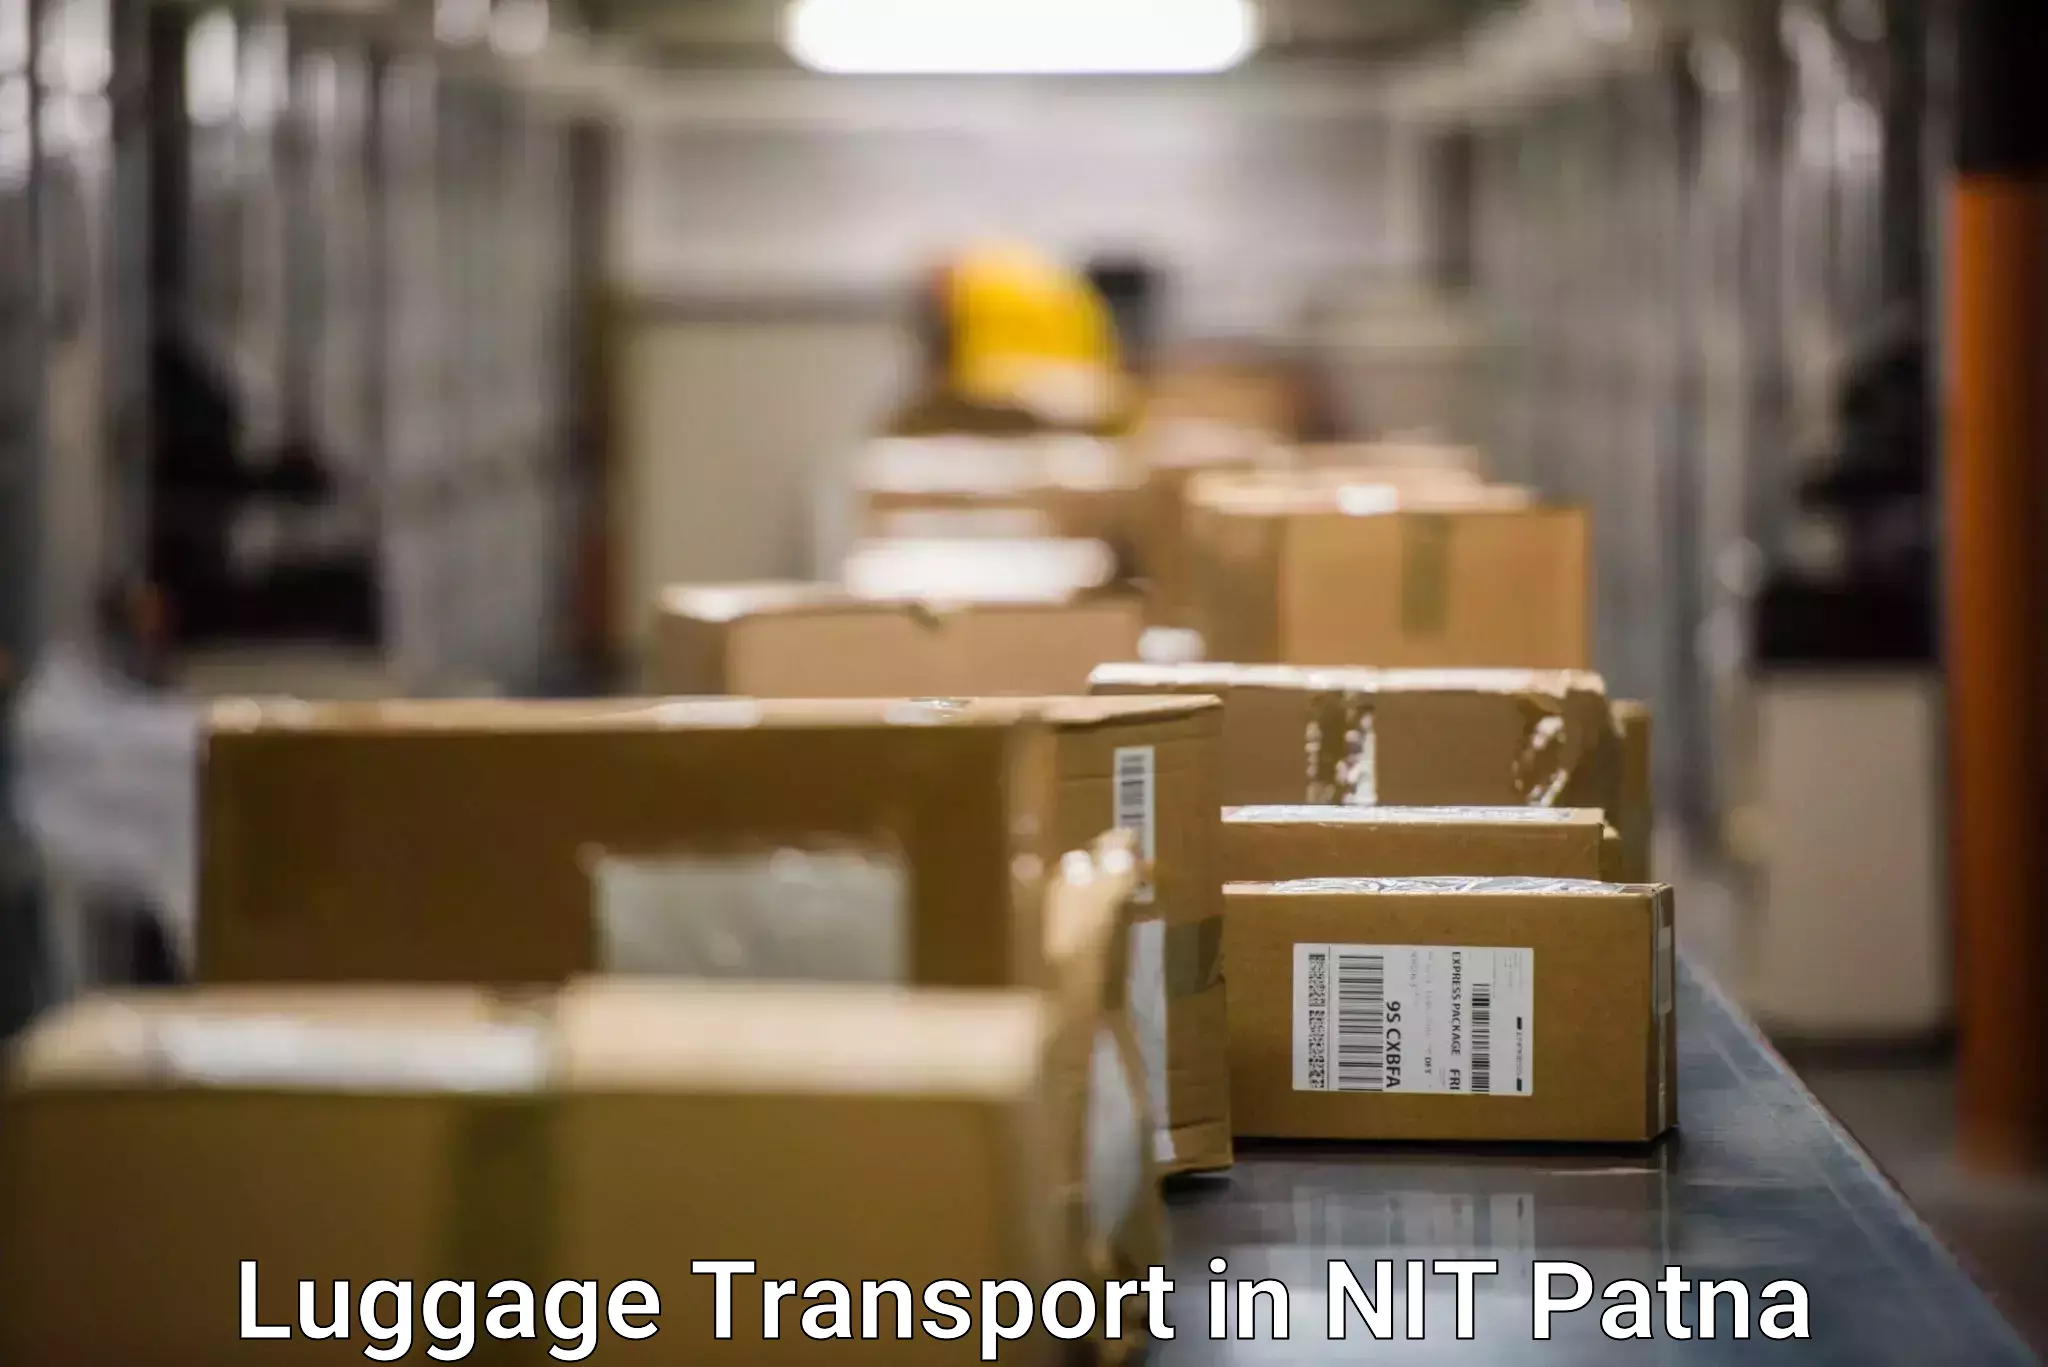 Baggage transport innovation in NIT Patna